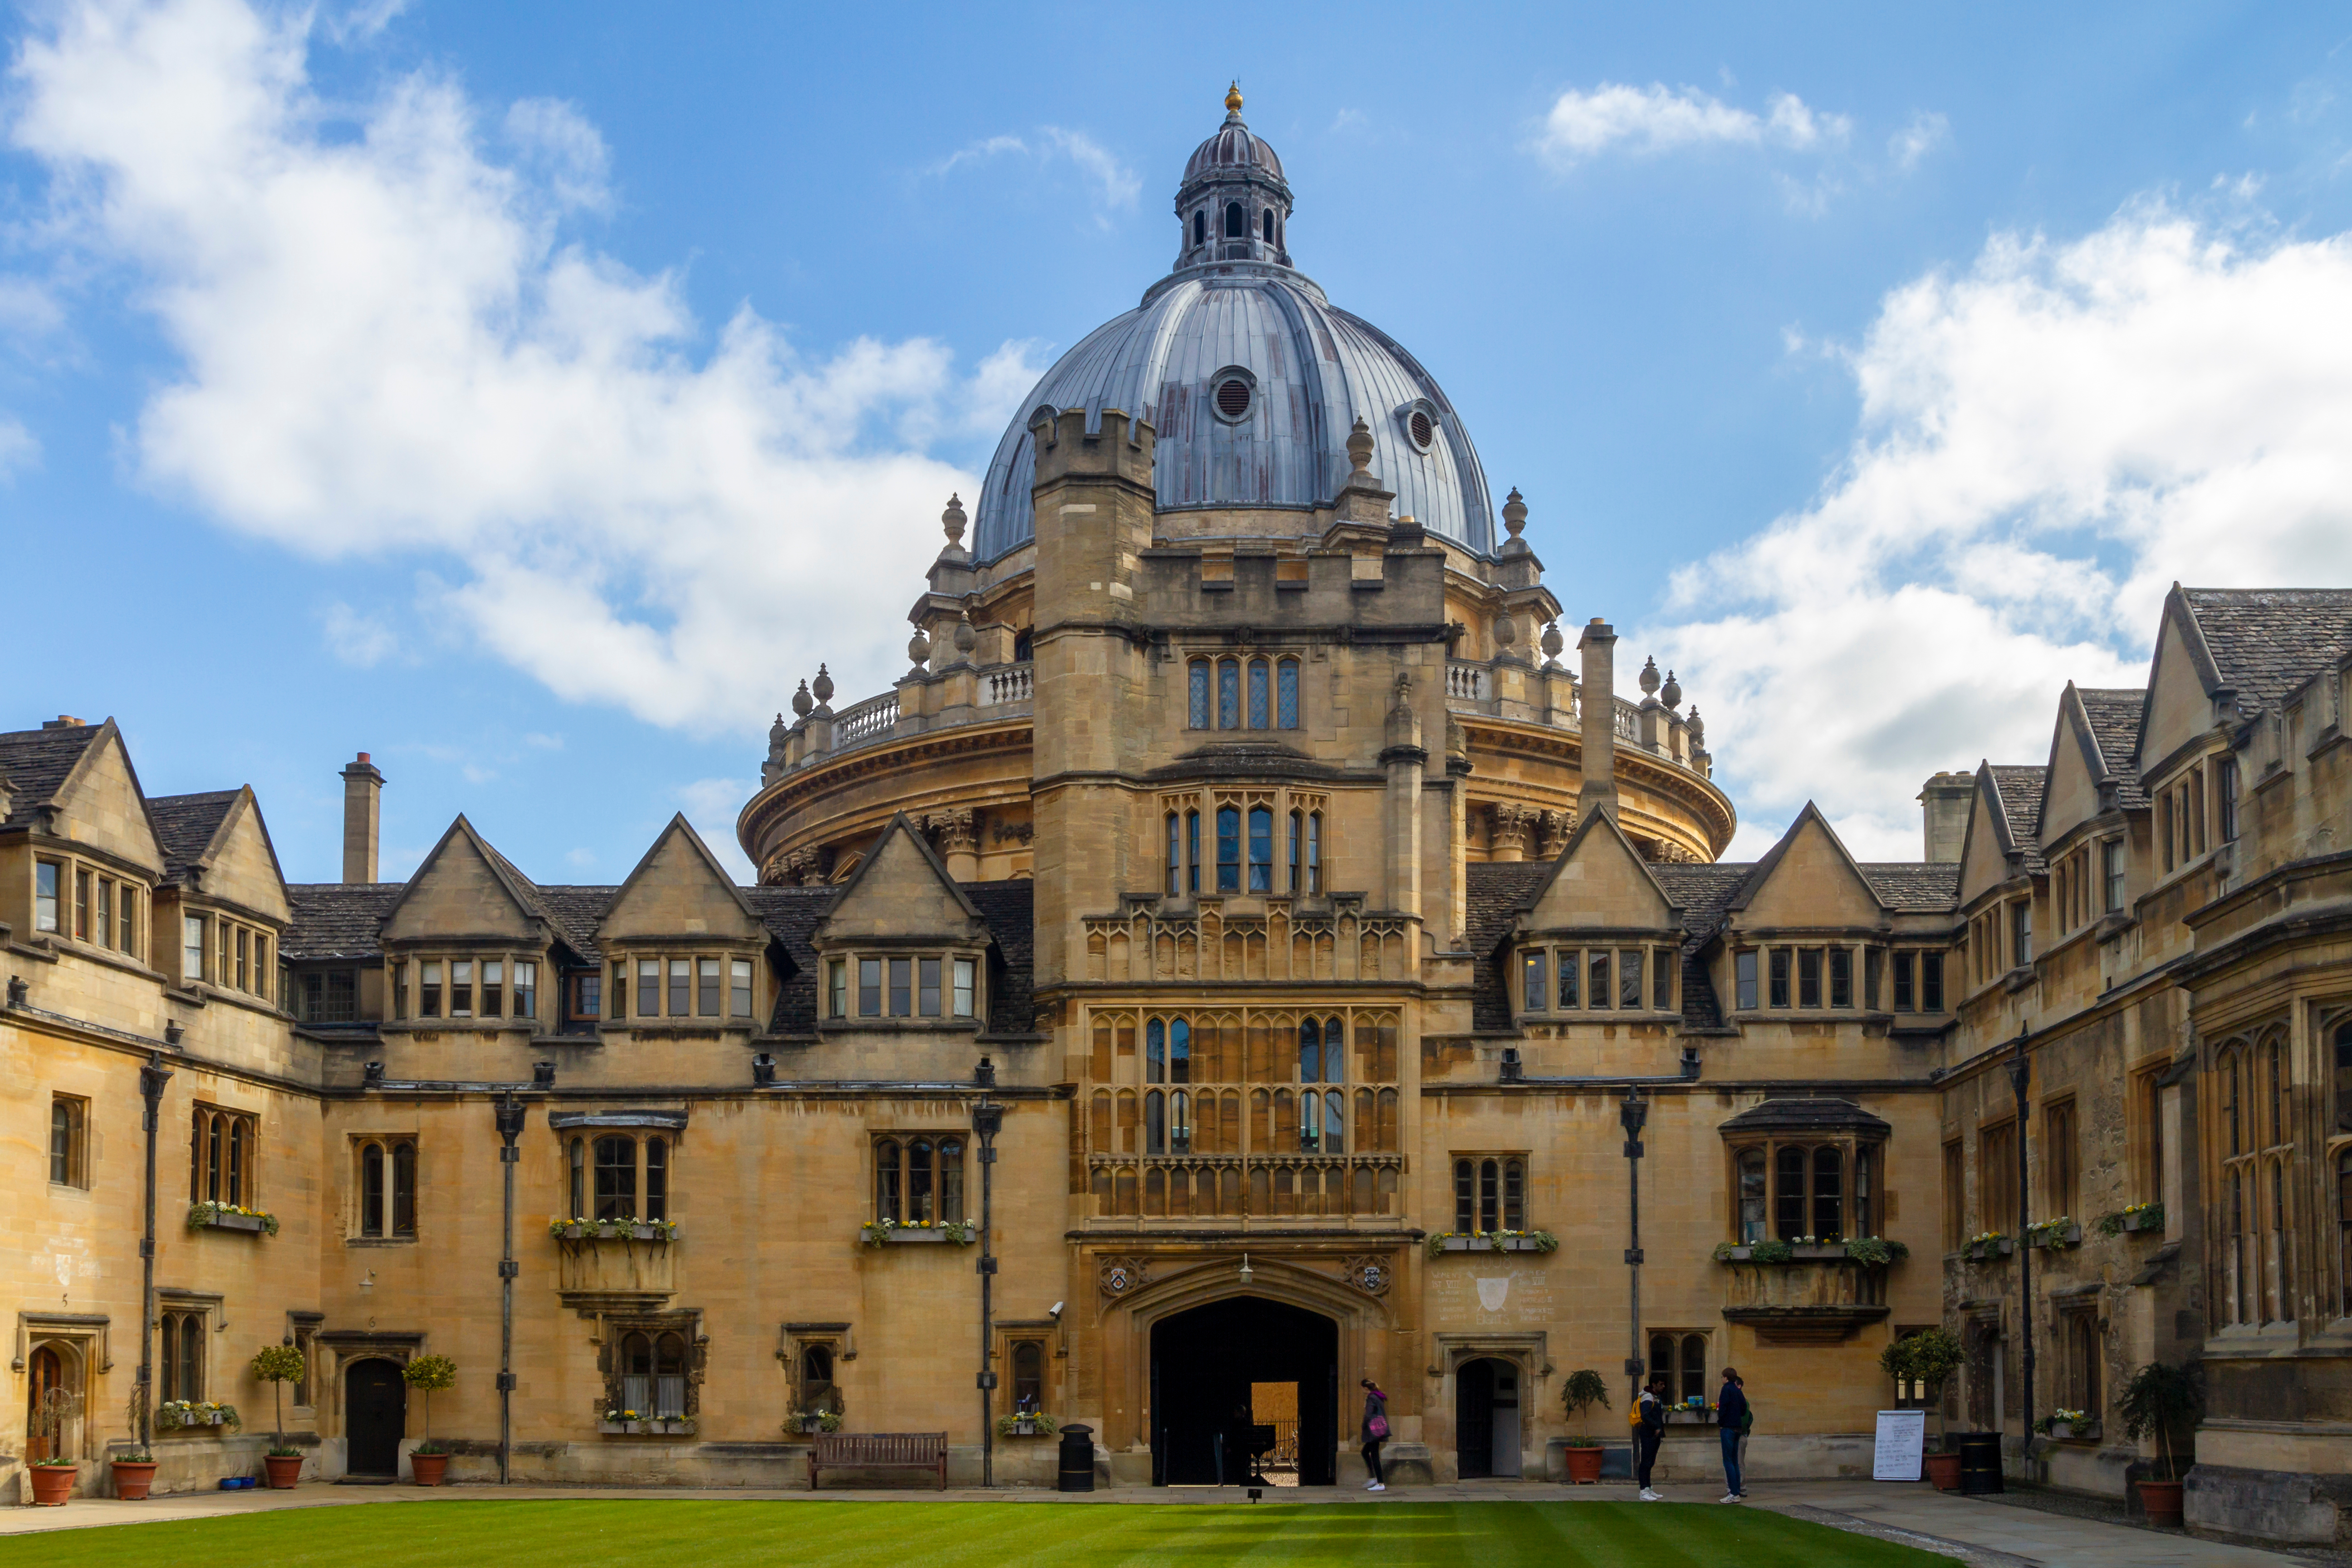 Oxford Spires International / Brasenose College, Oxford